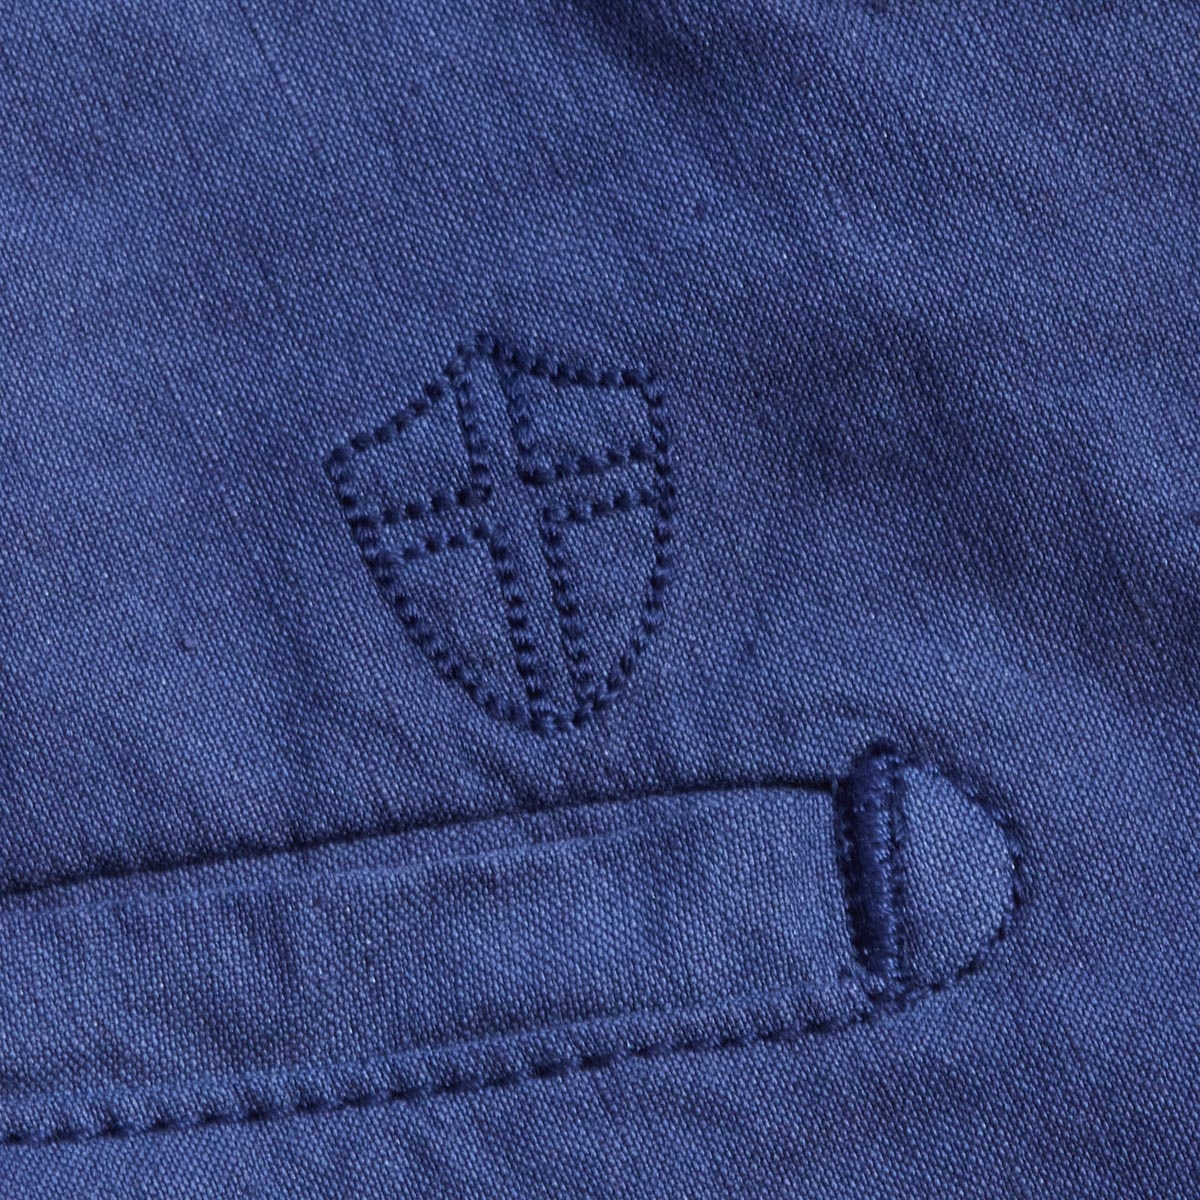 BLUE DE GENES Teo Milano Shorts - blue note